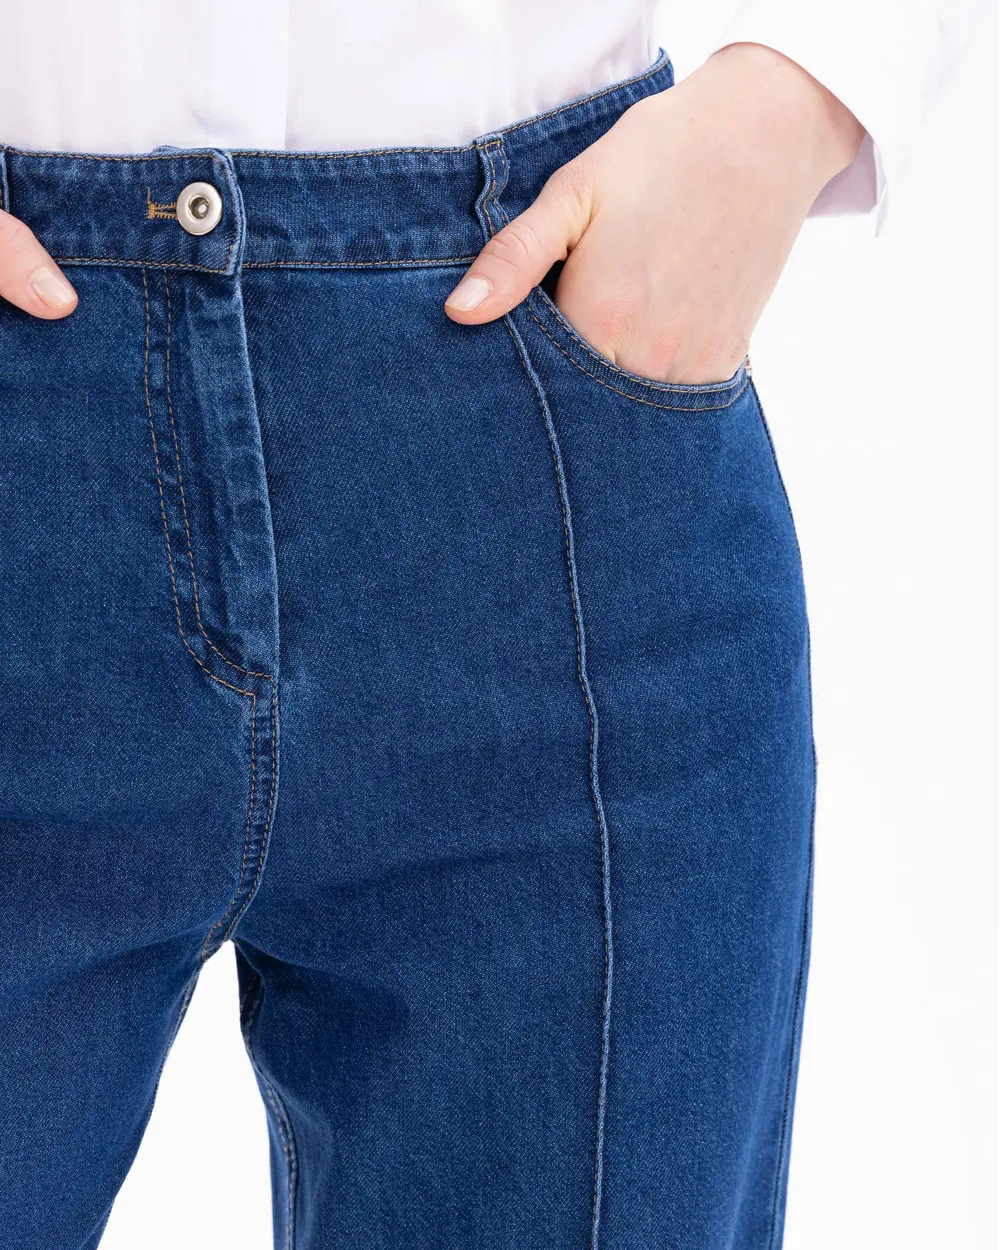 High Waist Jean Pants with Pockets